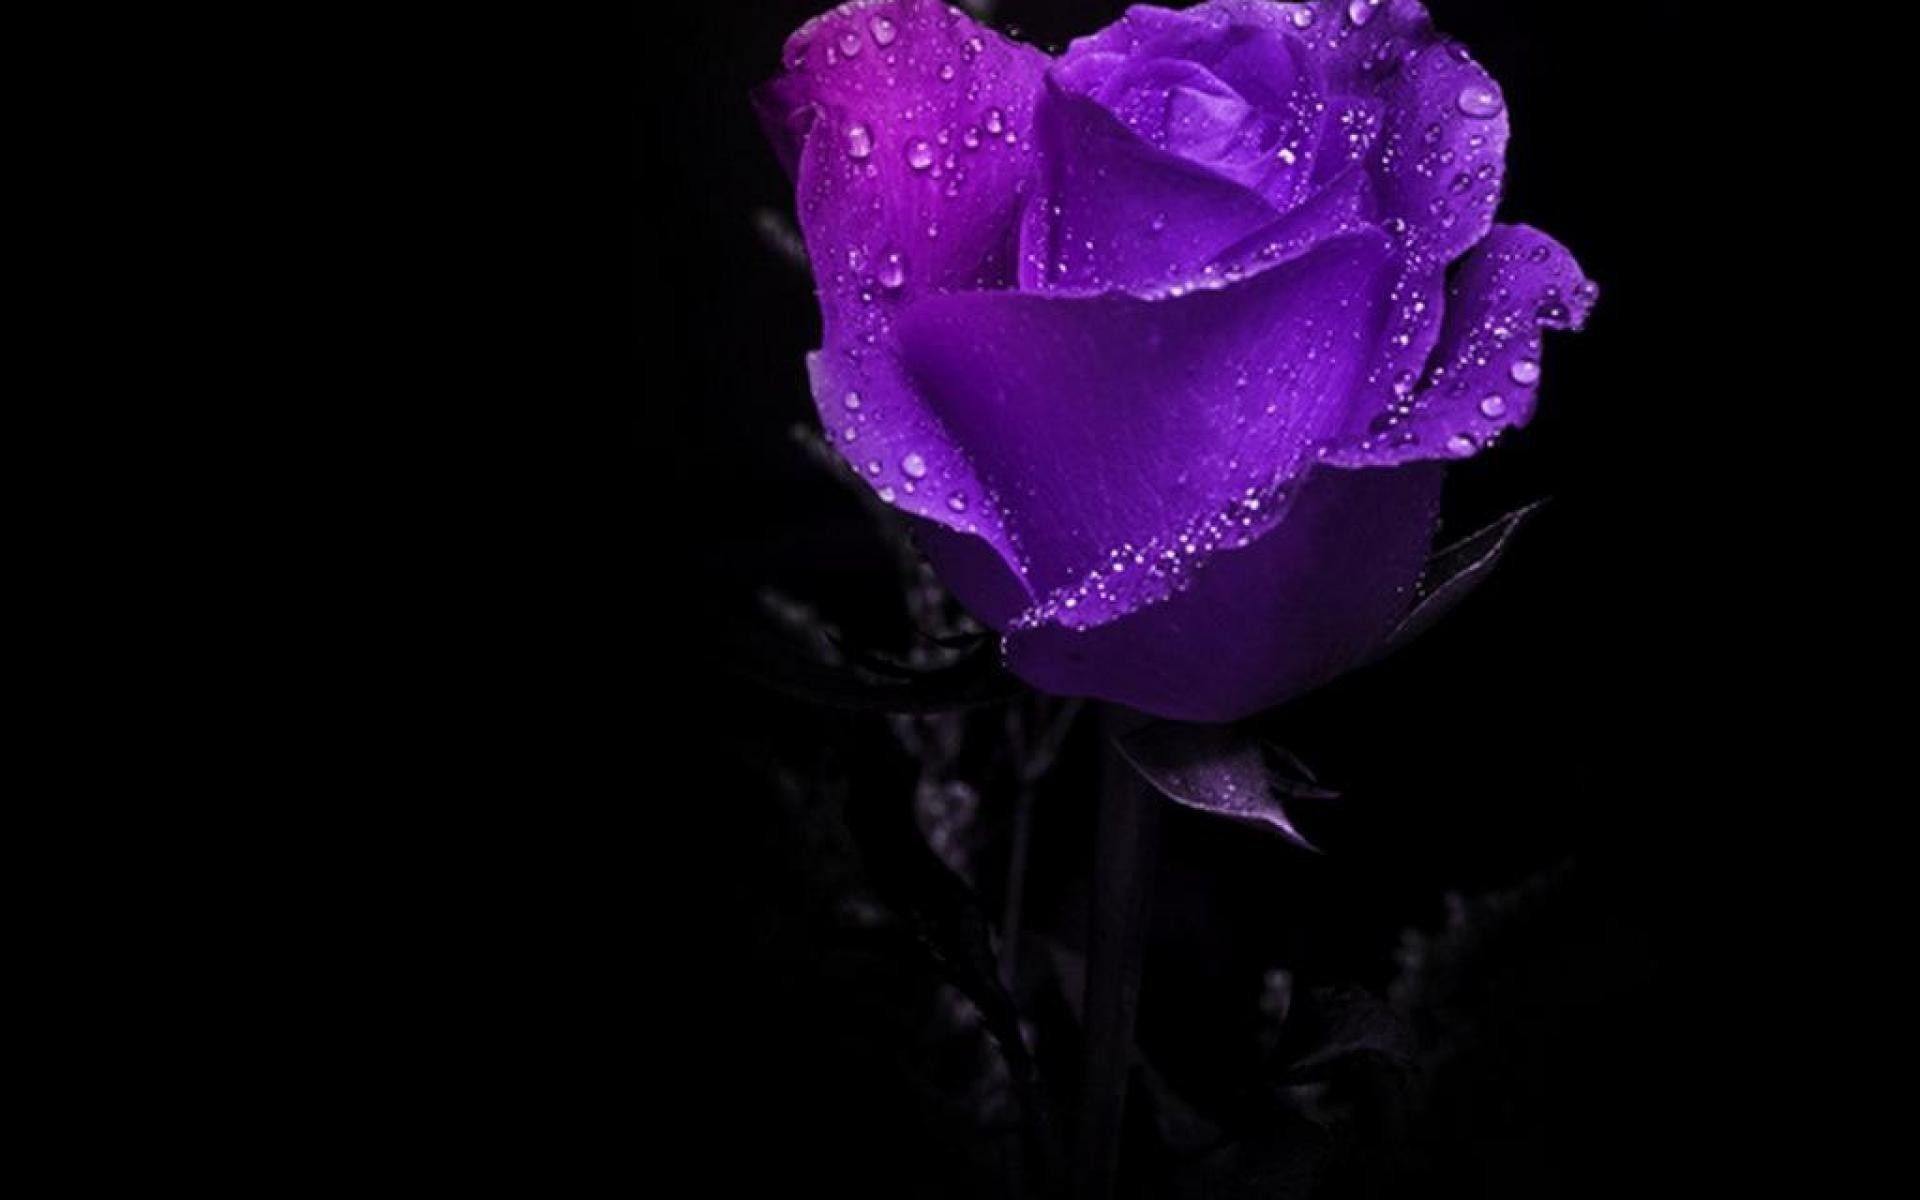 purple rose wallpaper for desktop